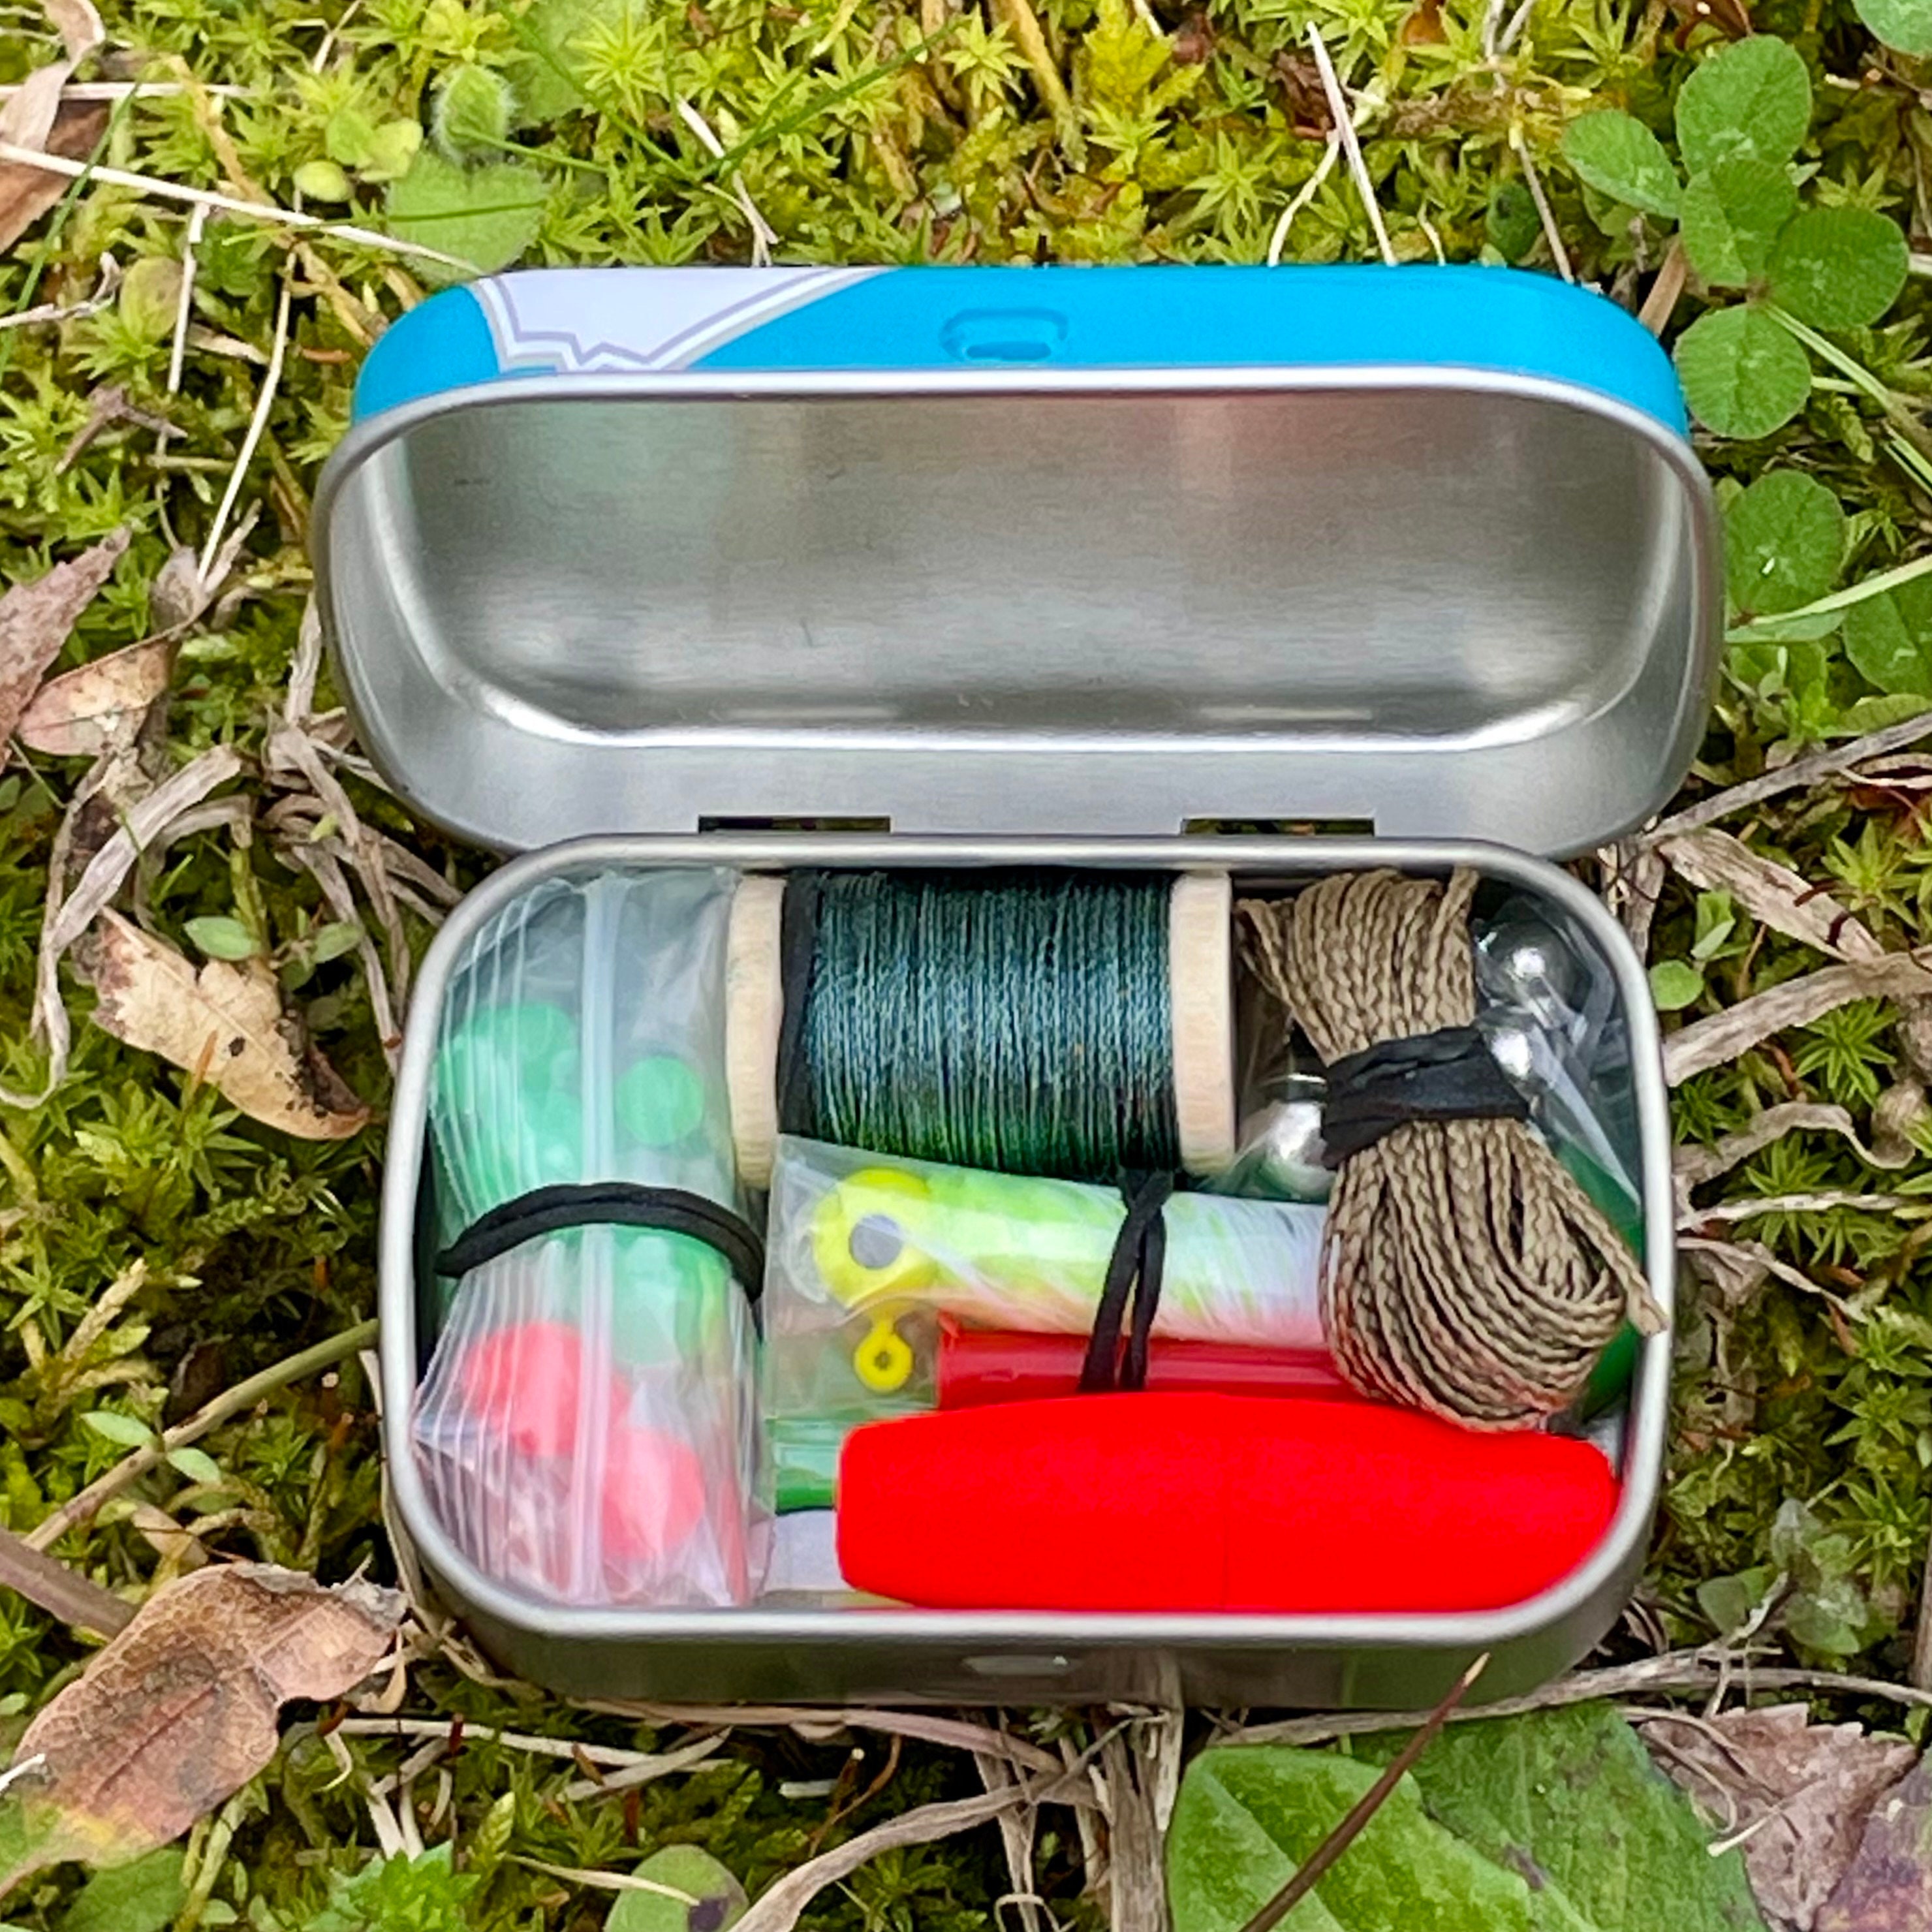 Buy 32 Pc Mini Survival Fishing Kit in Altoids Smalls Tin Online